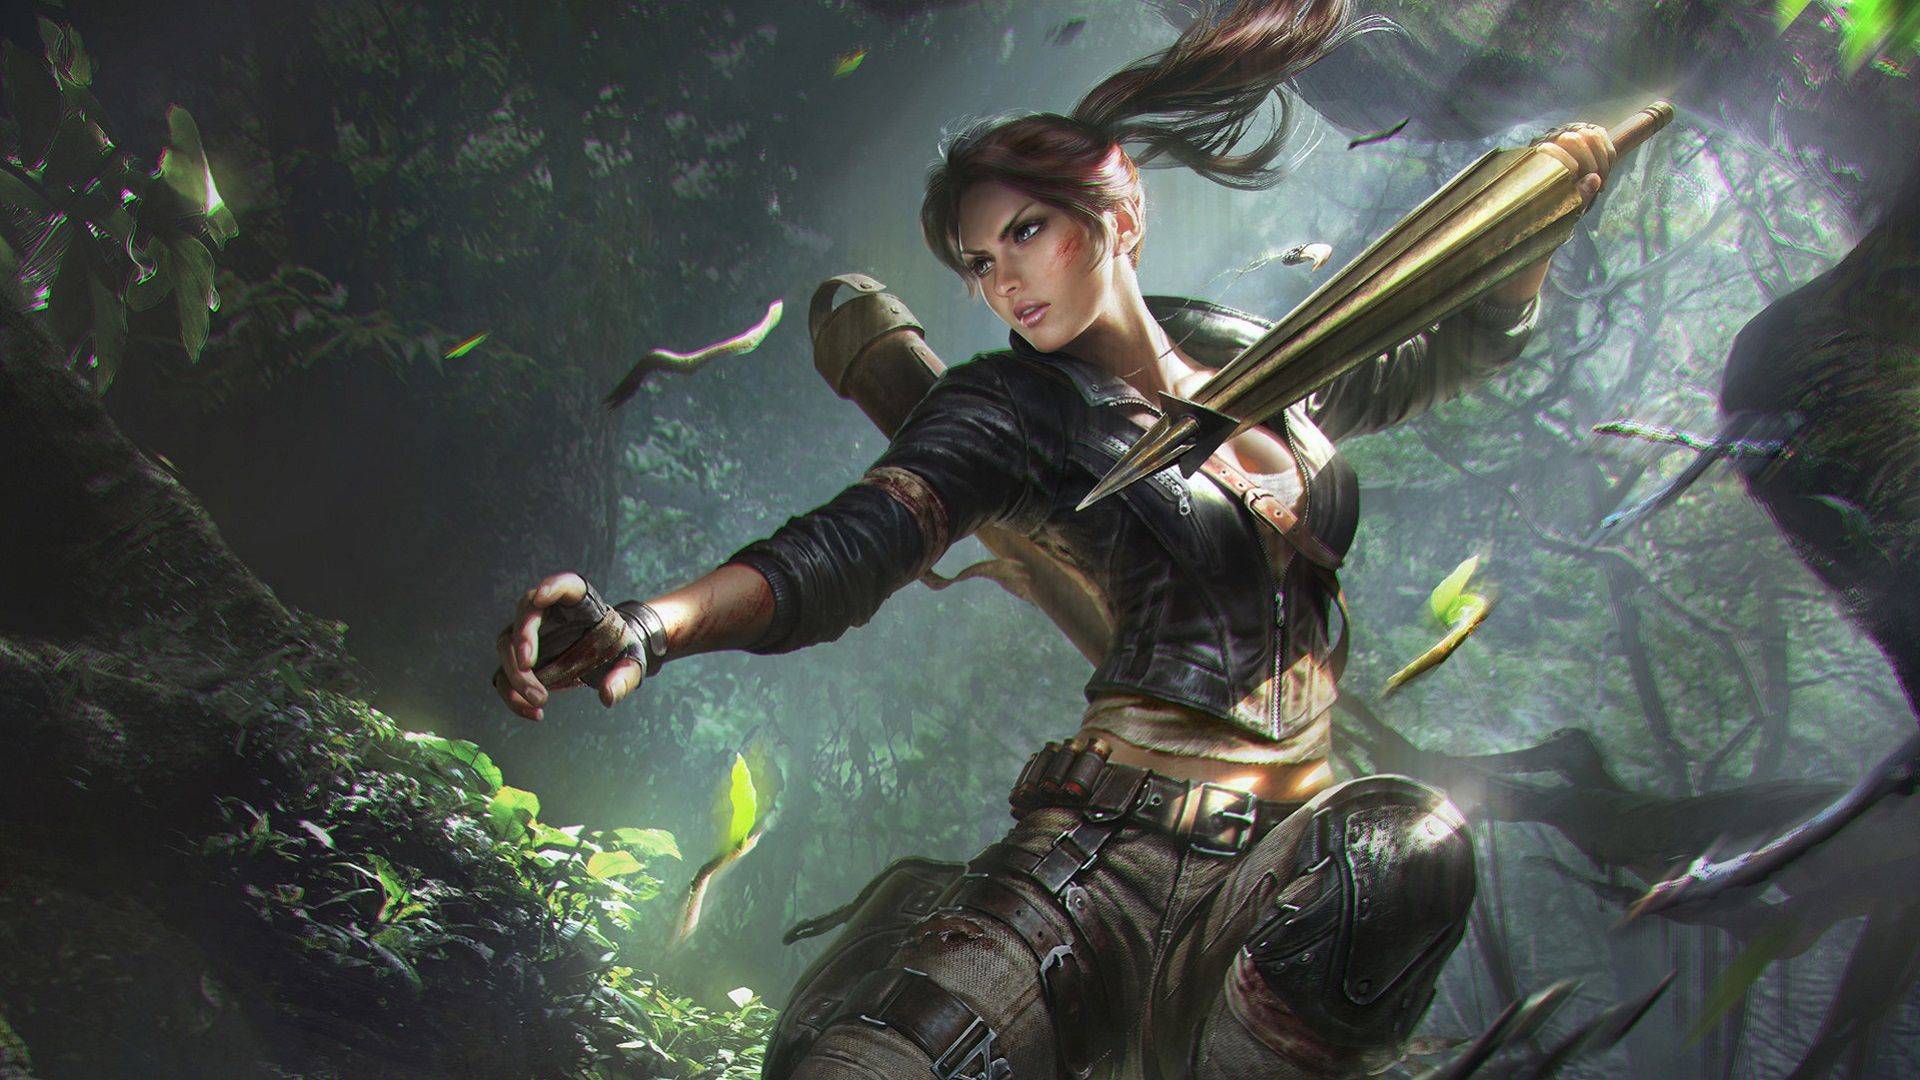 Lara Croft Tomb Riader Digital Art, HD Games, 4k Wallpaper